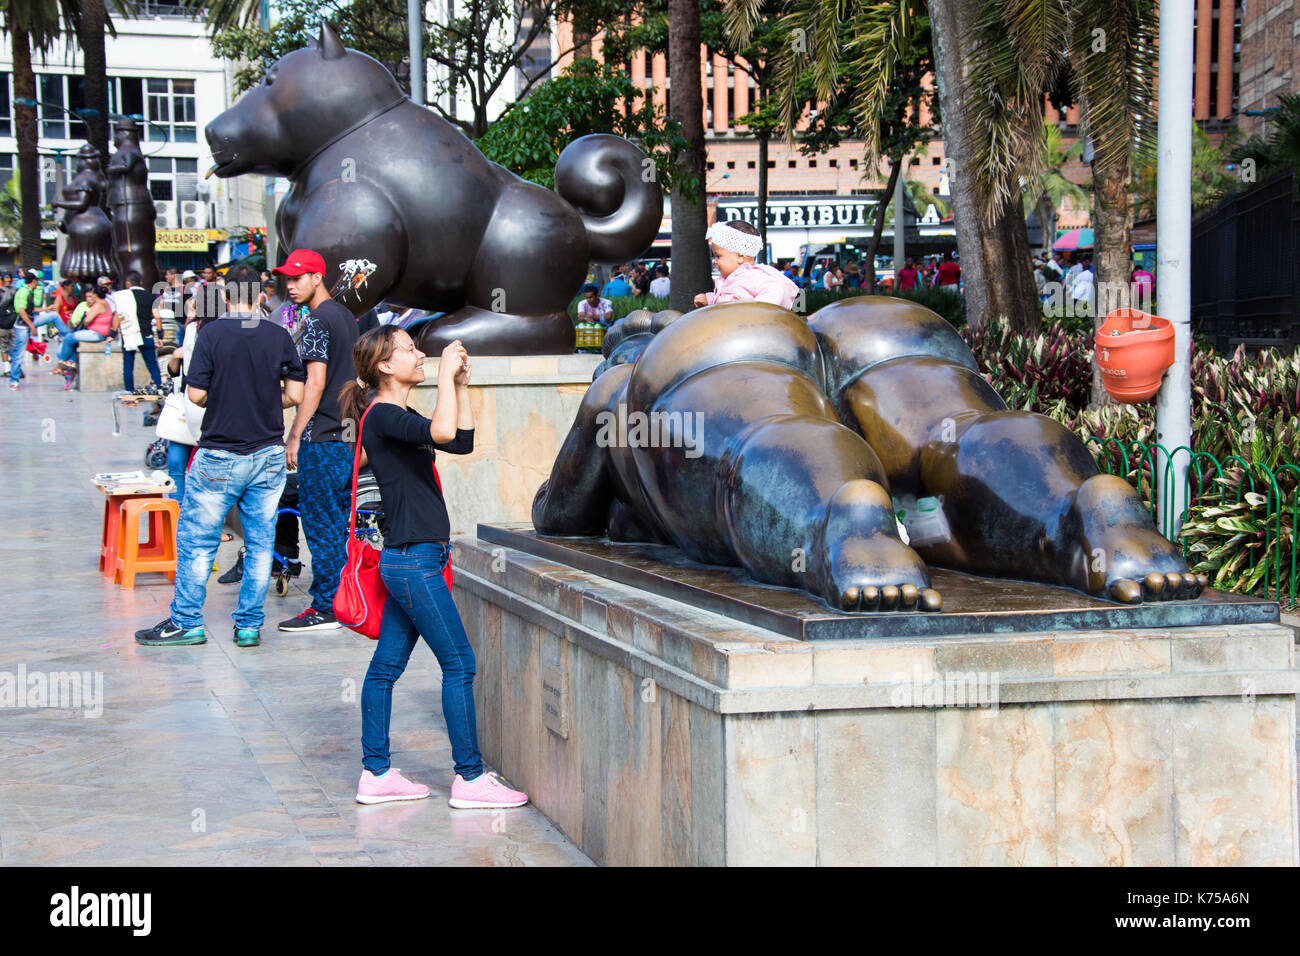 Mujer con espejo Skulptur, Botero Plaza, Medellin, Kolumbien Stockfoto